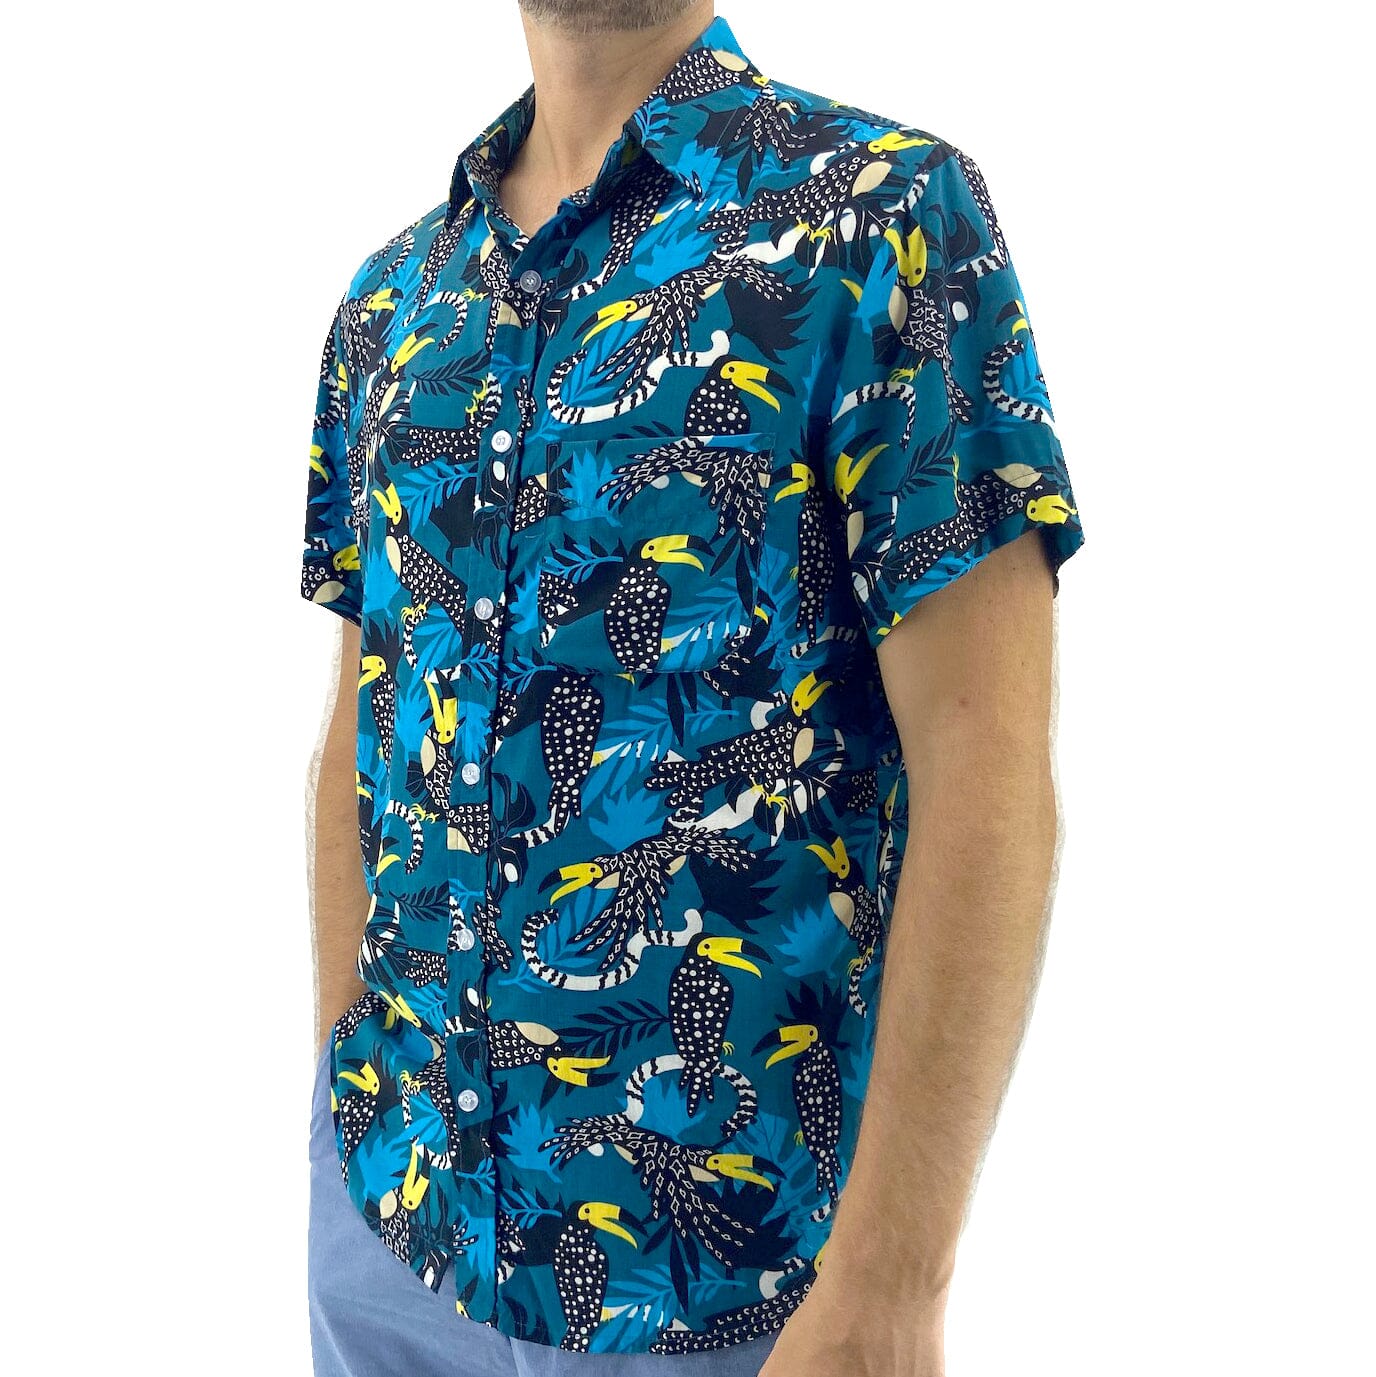 Men's Shirts Parrot Fashion XXL / Blue